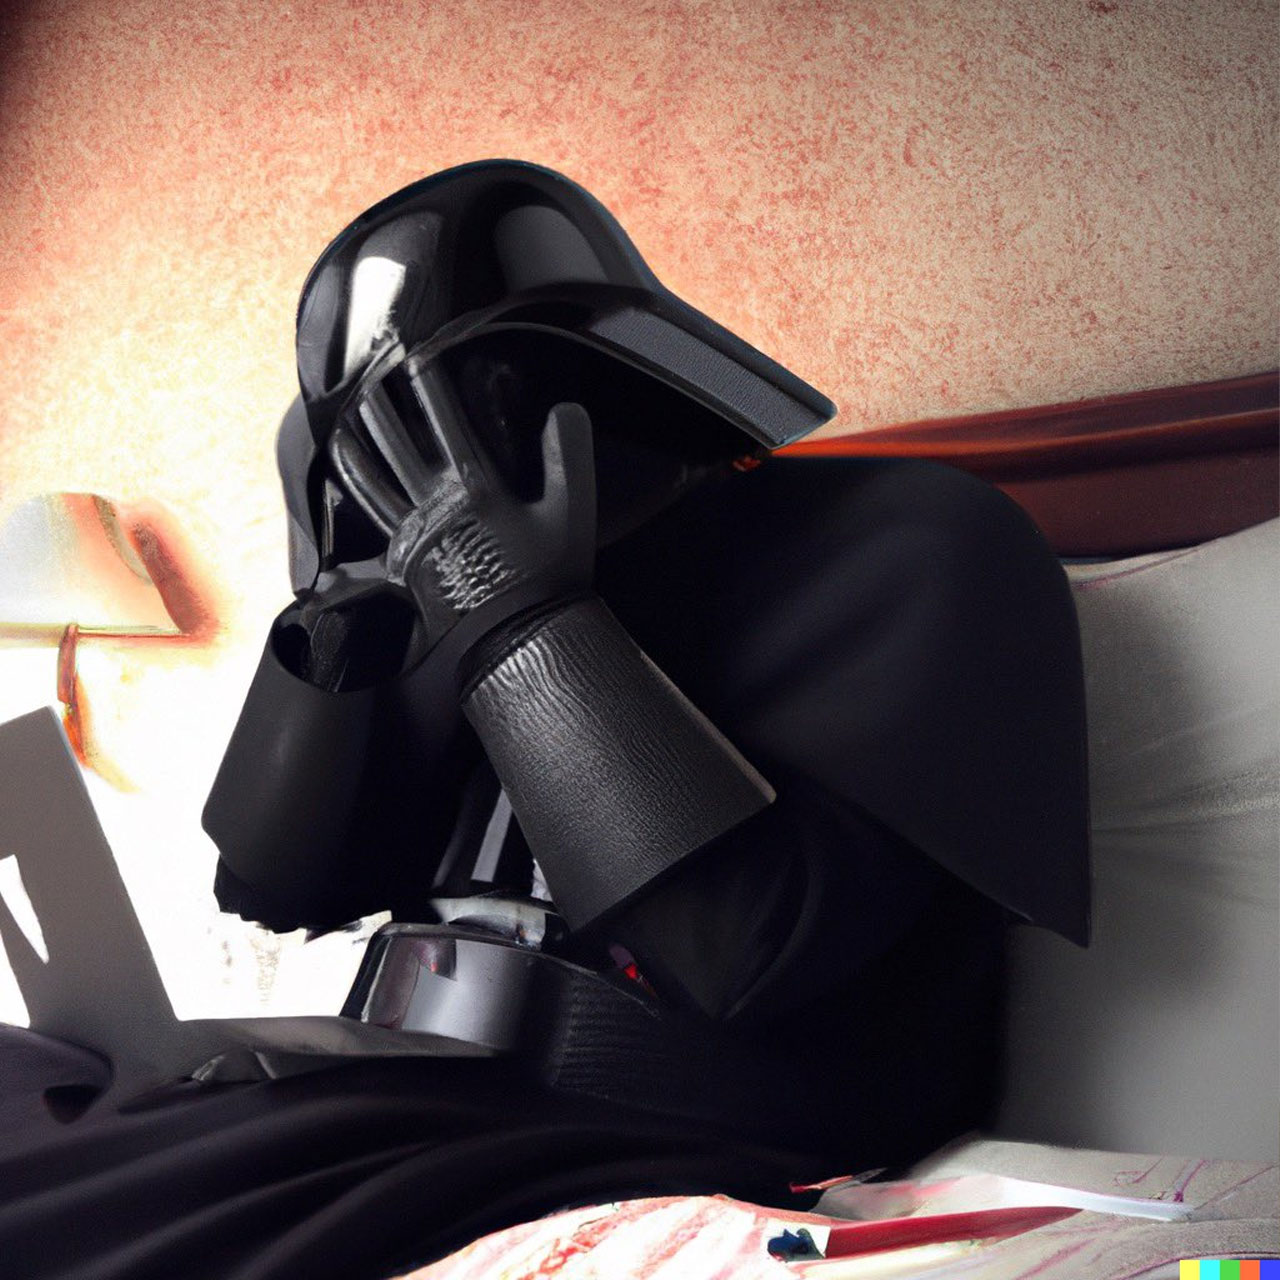 Ek eklemeden e-posta gönderdiğini fark eden Darth Vader